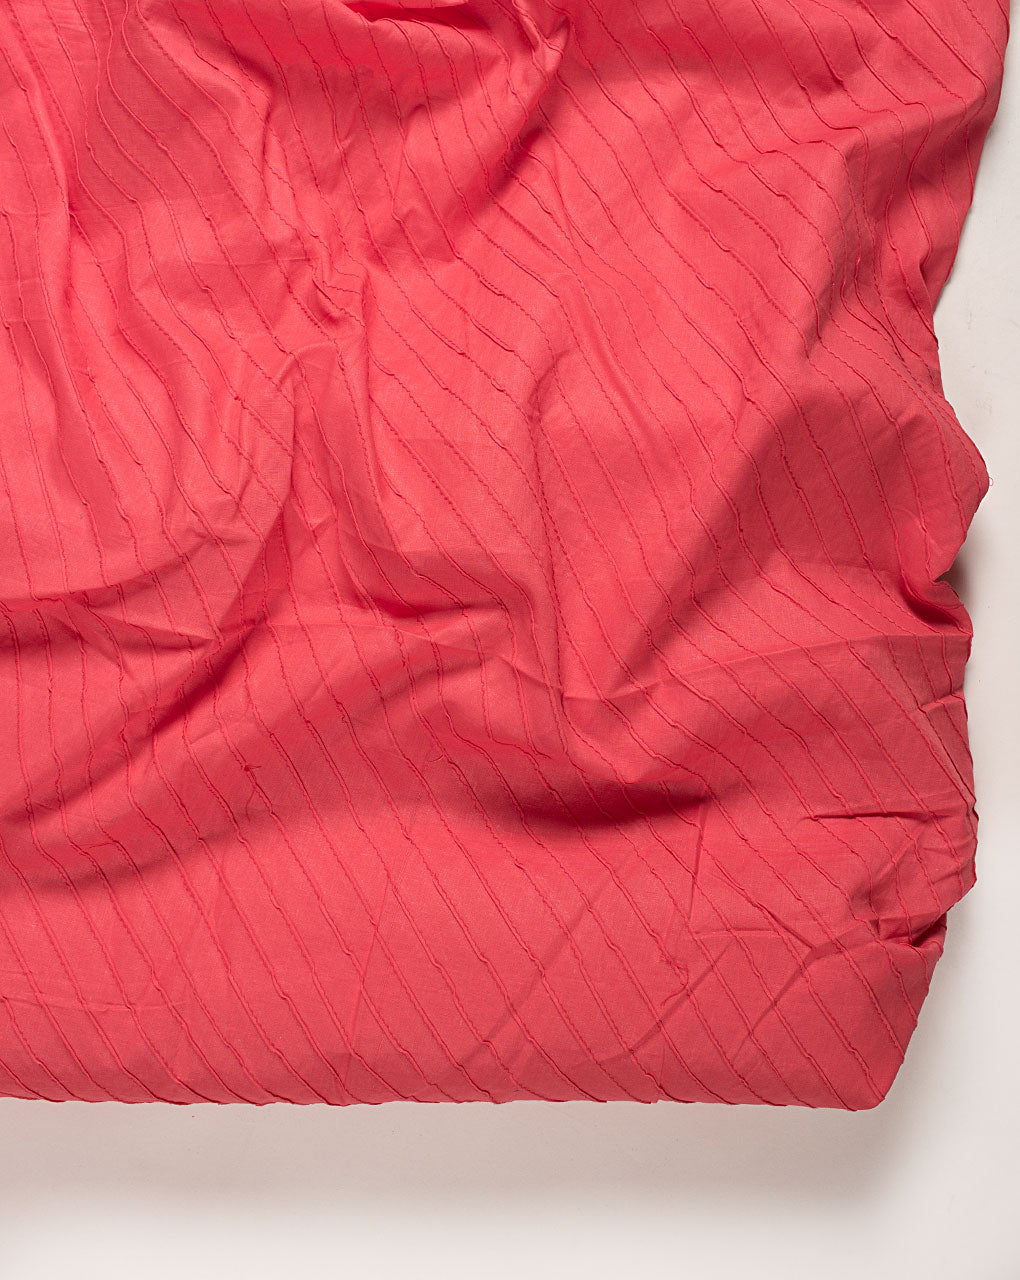 Salmon Pin-Tucks Cotton Fabric